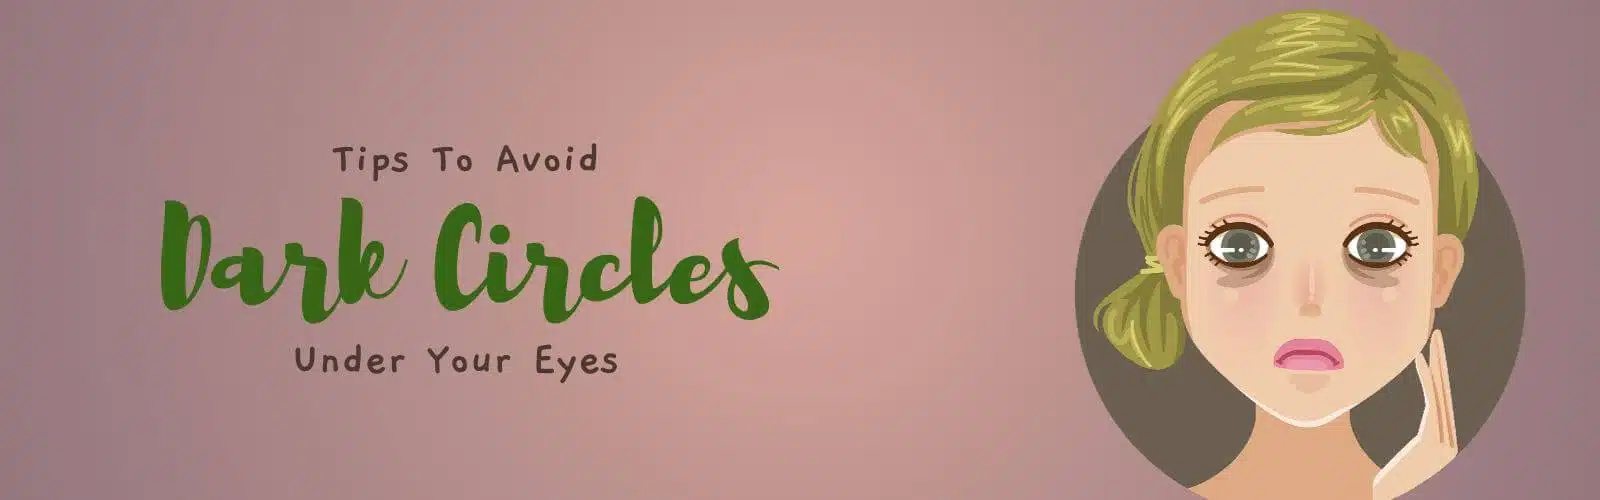 Organic Treatment for Under-Eye Dark Circles